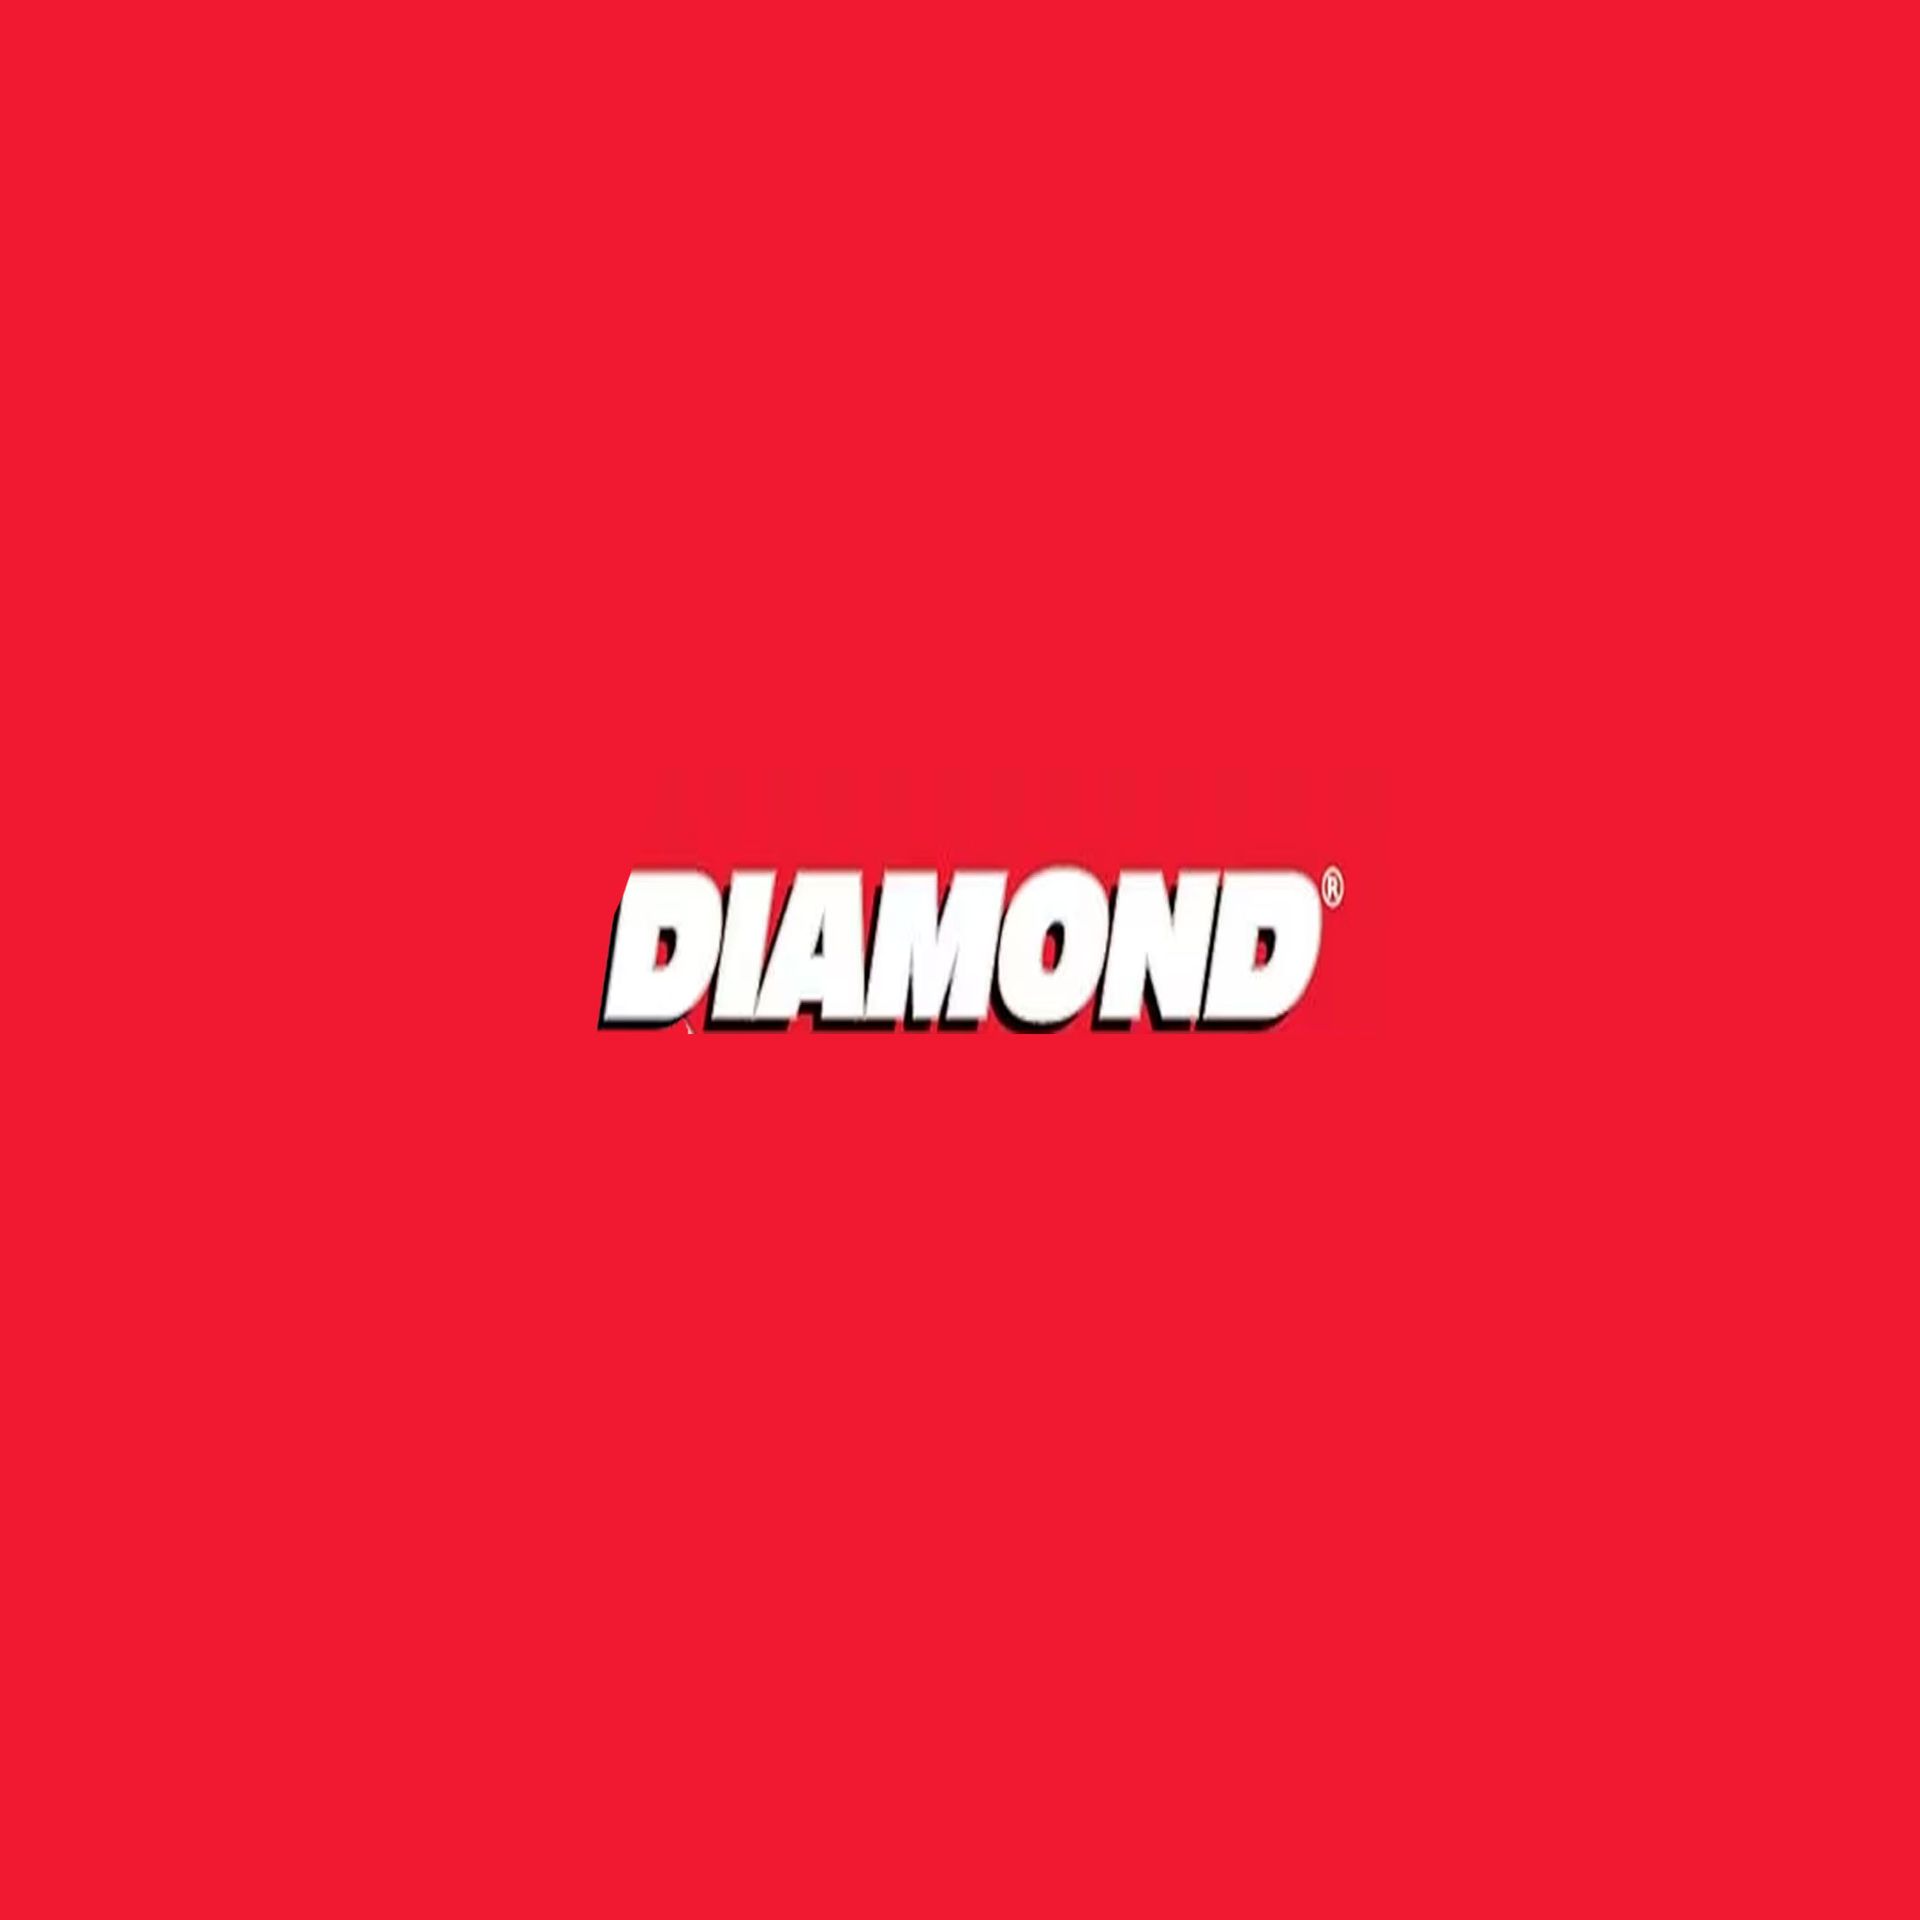 Product Brand: DIAMOND